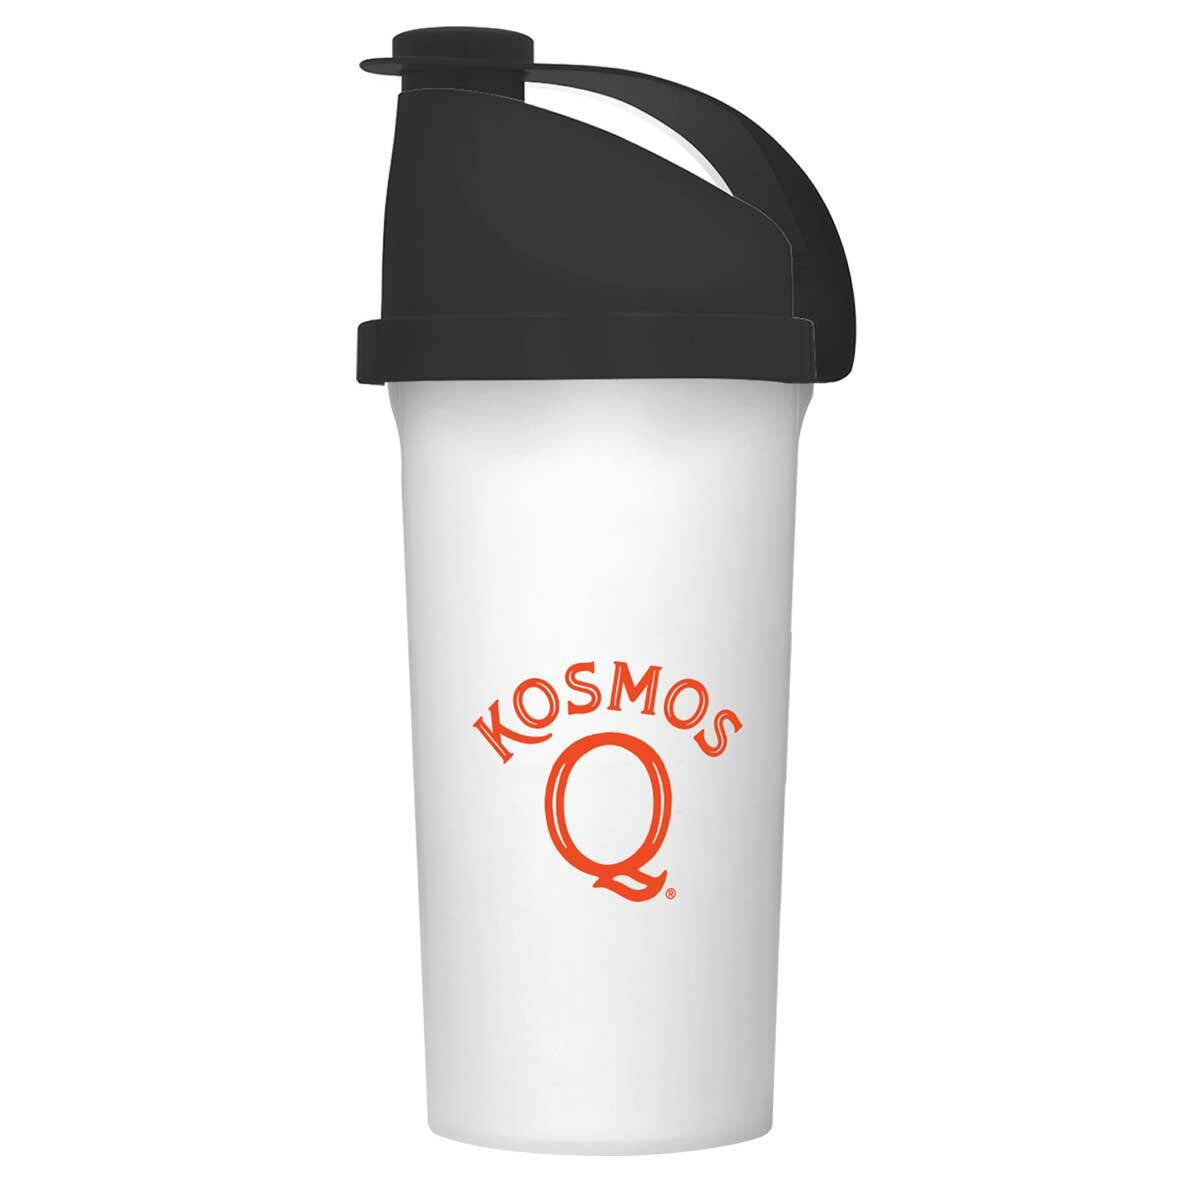 Kosmo's Q BBQ Accessories Product Mixer 25oz